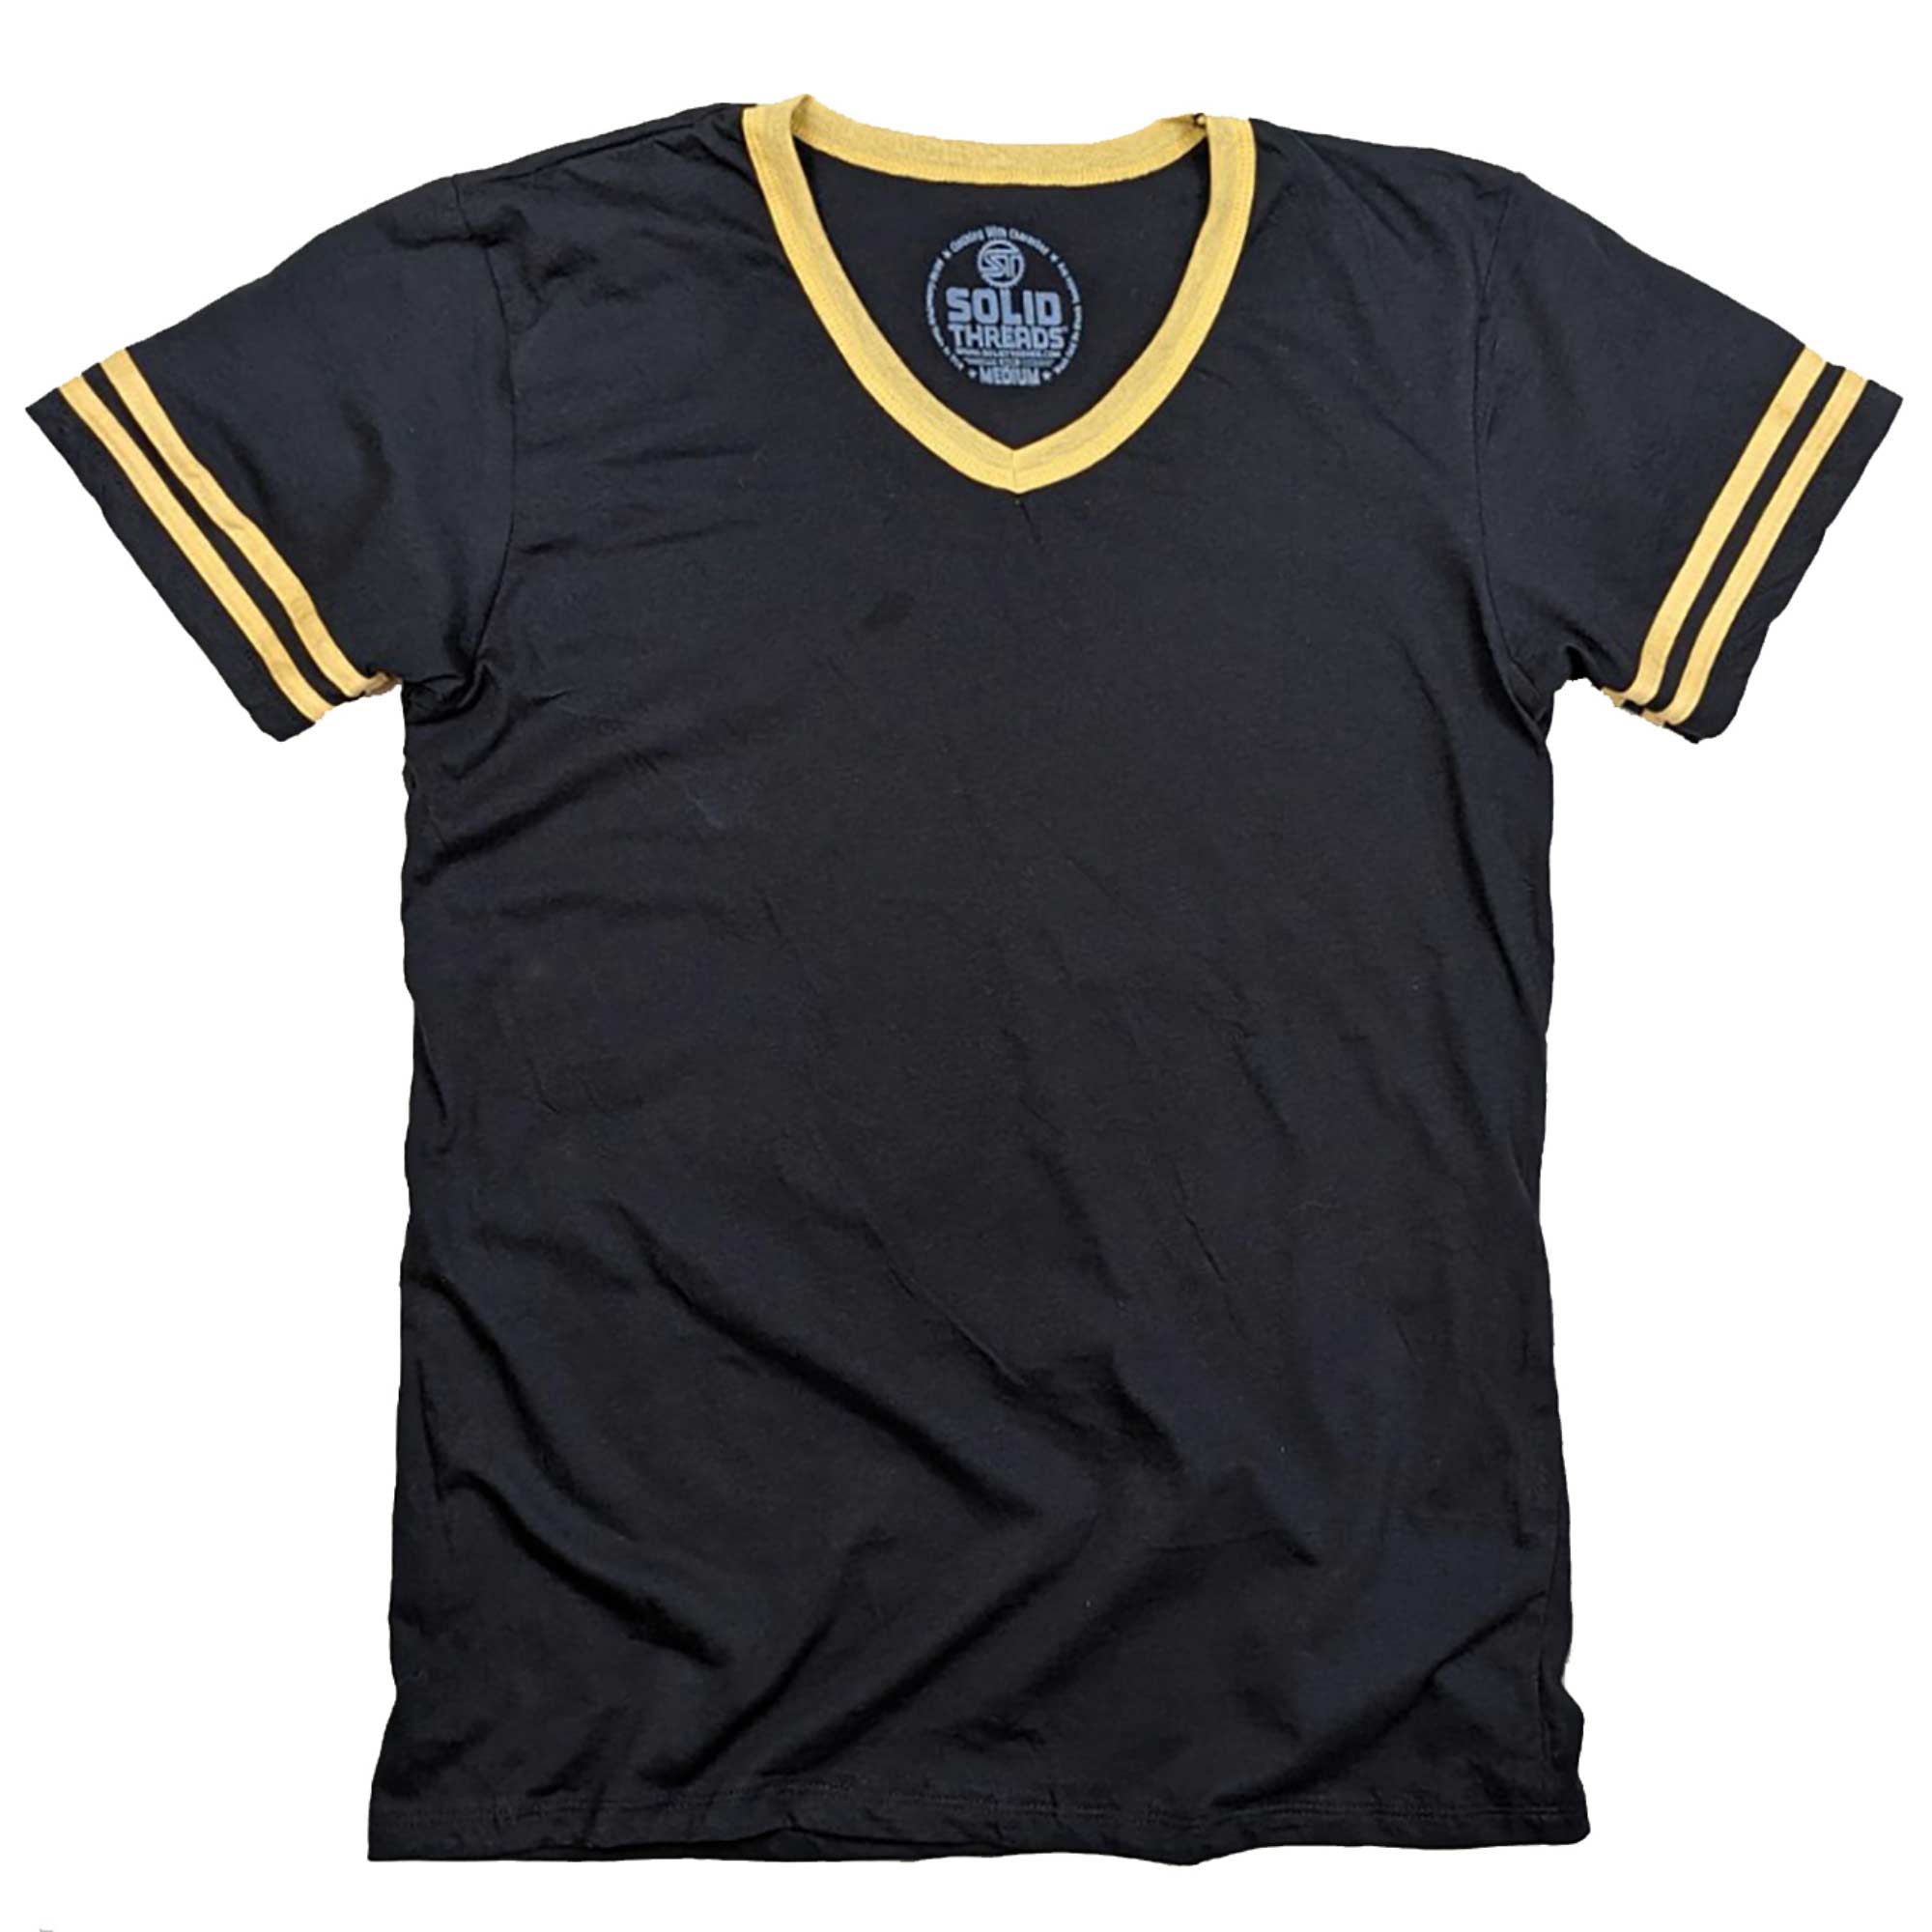 Men's Retro Ringer V-neck T-shirt Black/Gold | Super Soft Vintage Inspired Tee | USA Made